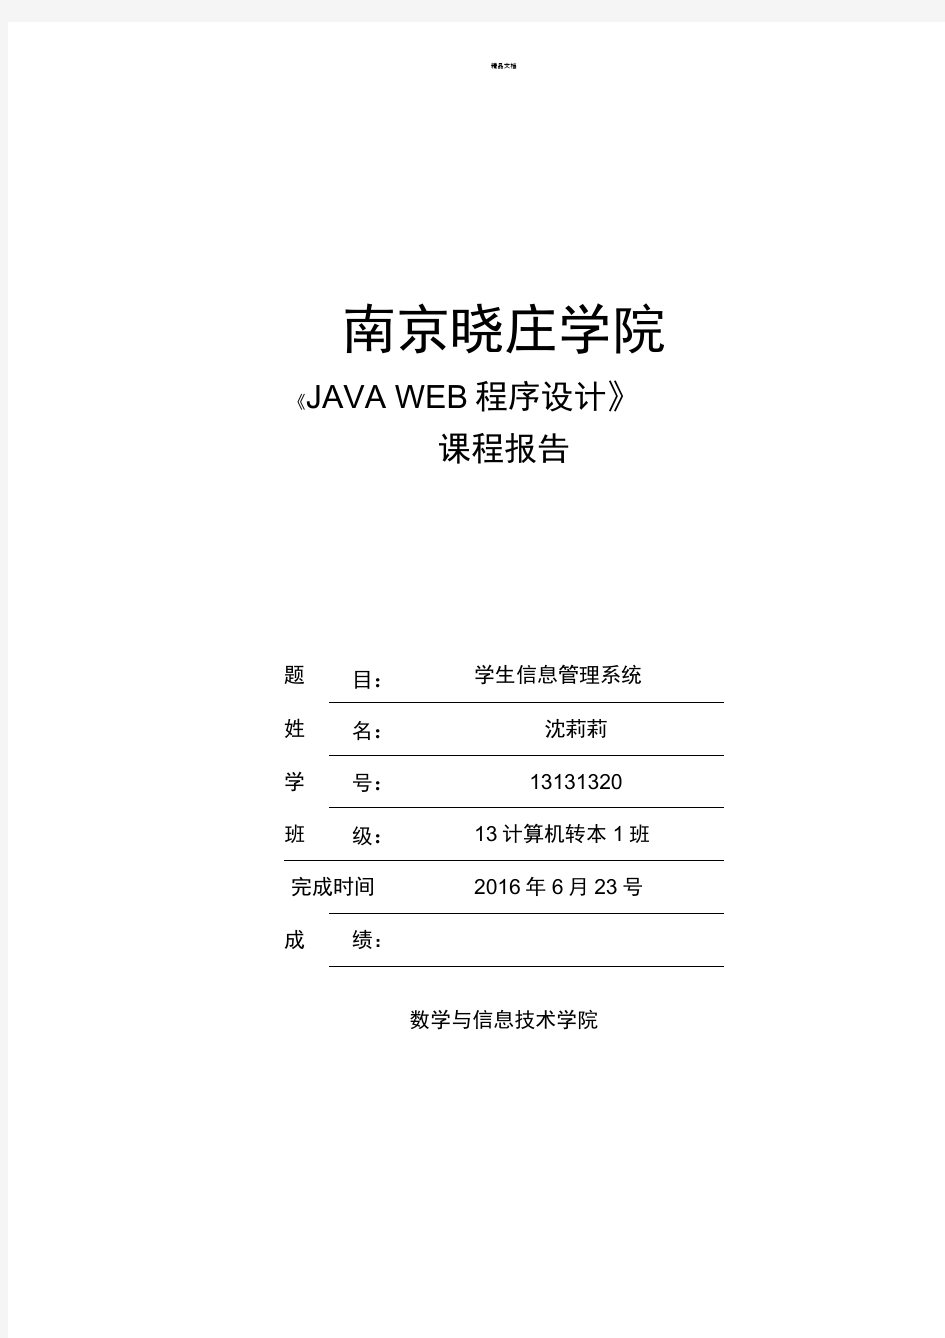 《JAVAWEB程序设计》报告模板